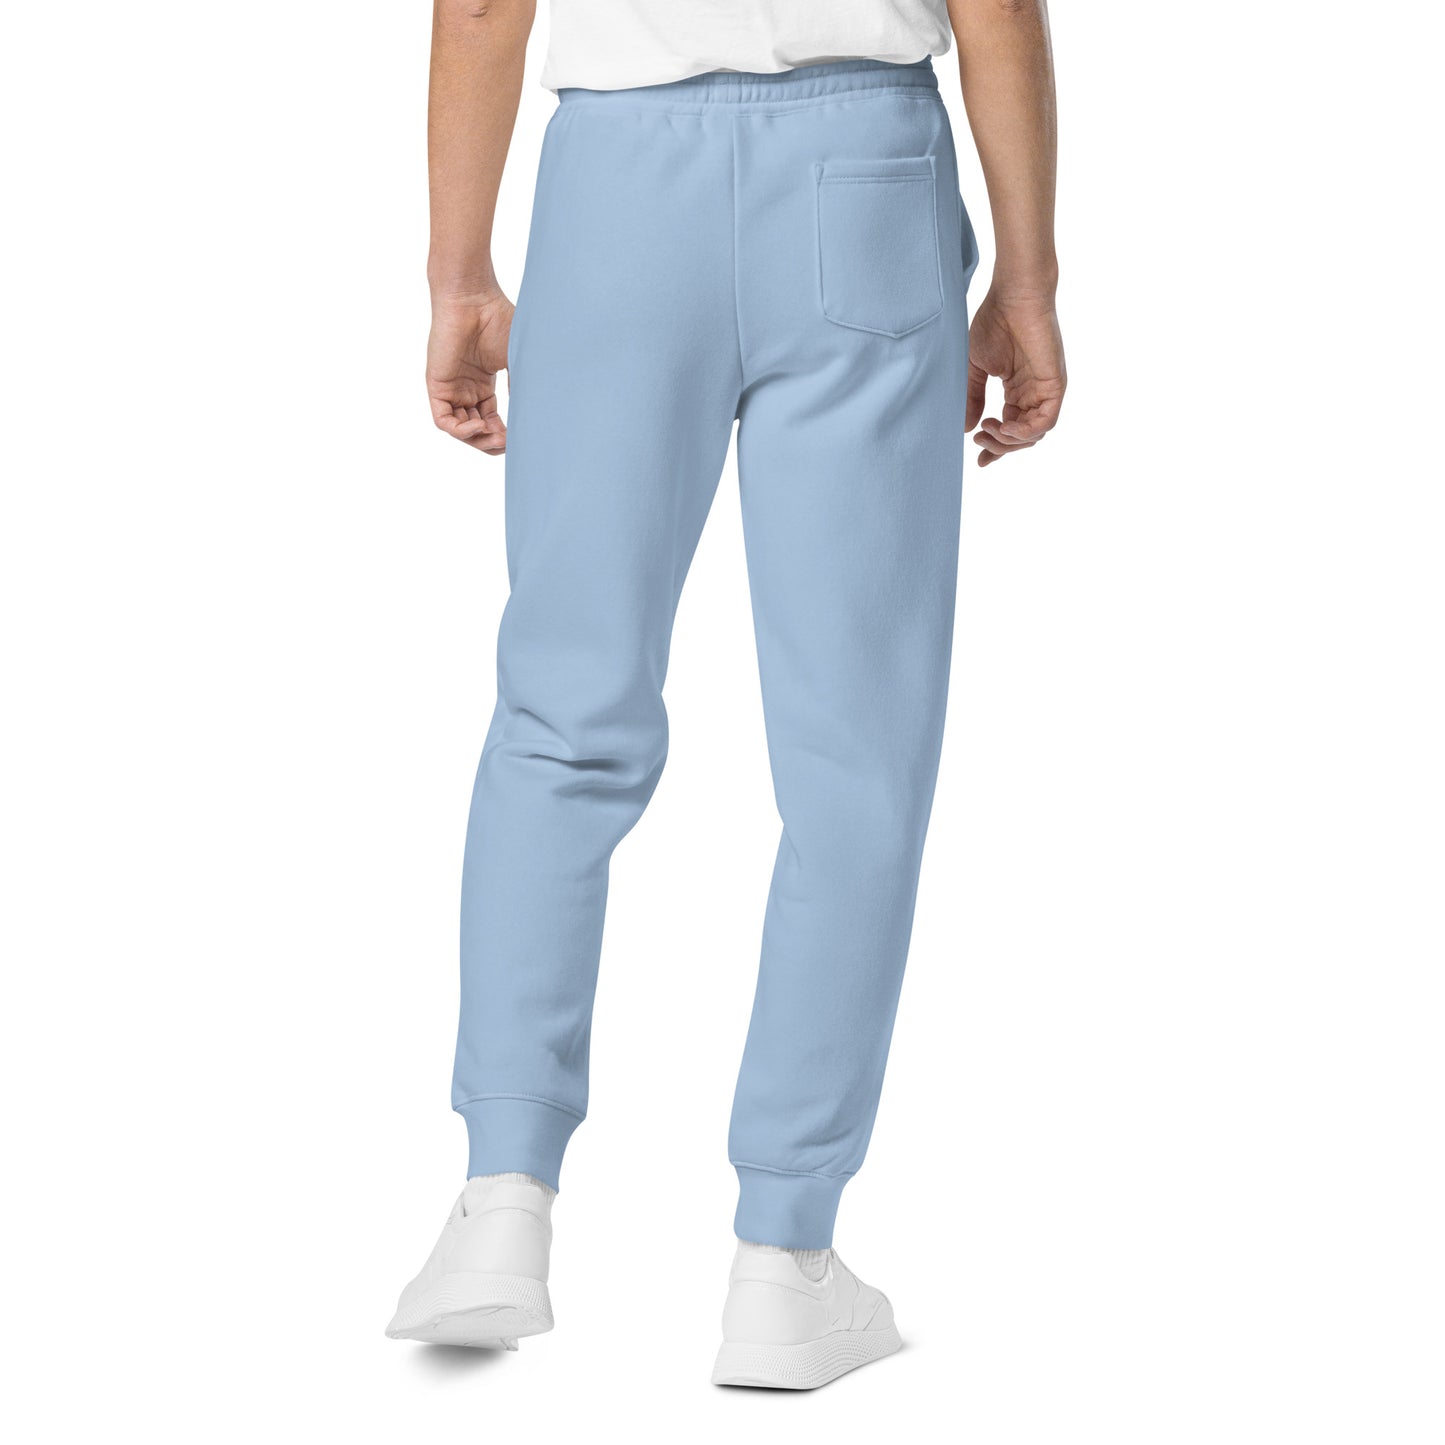 Unisex Washed Jogger Sweatpants - Multiple Color Options